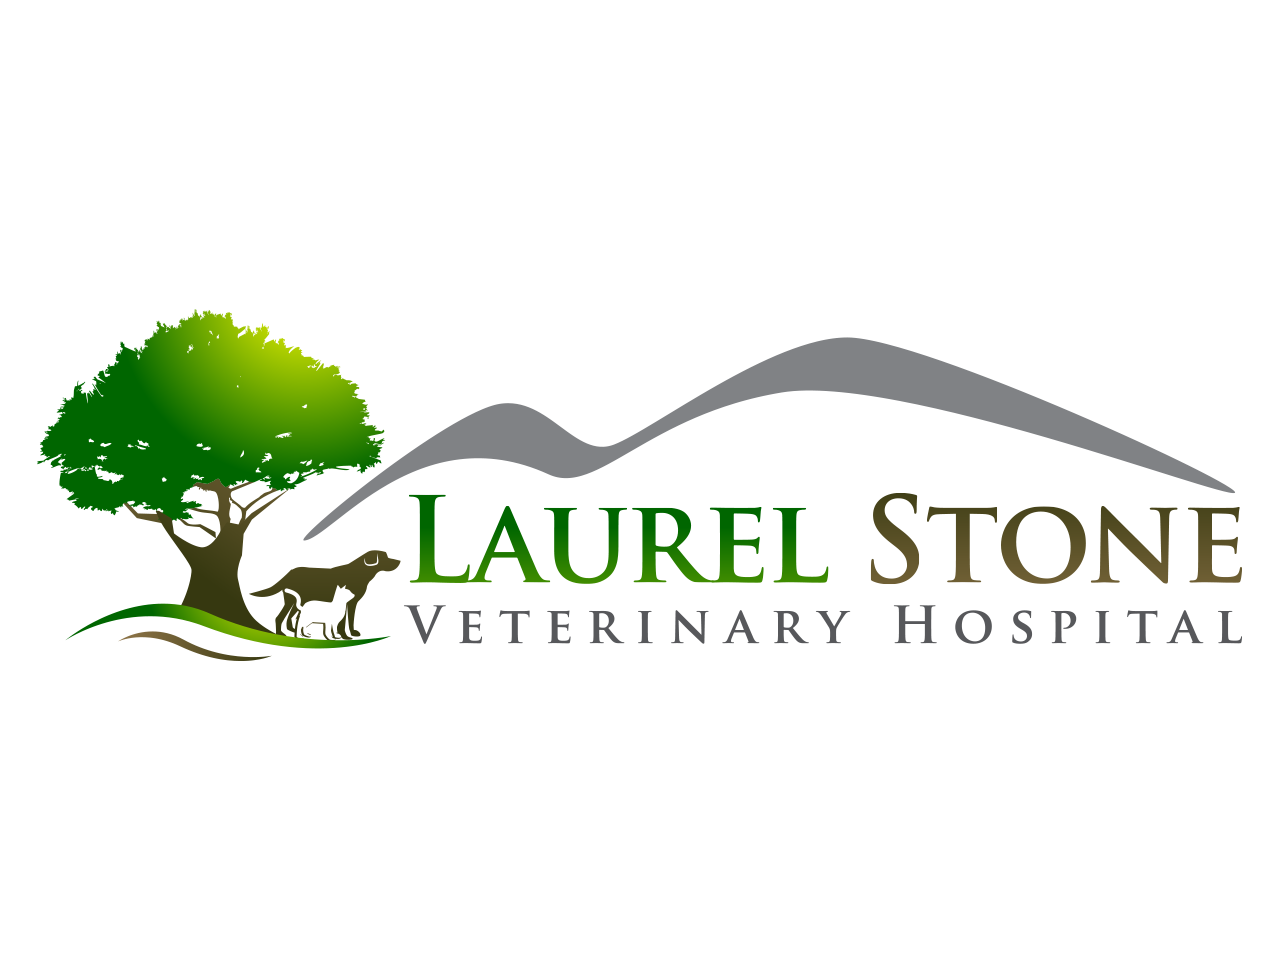 Laurel Stone Veterinary Hospital logo